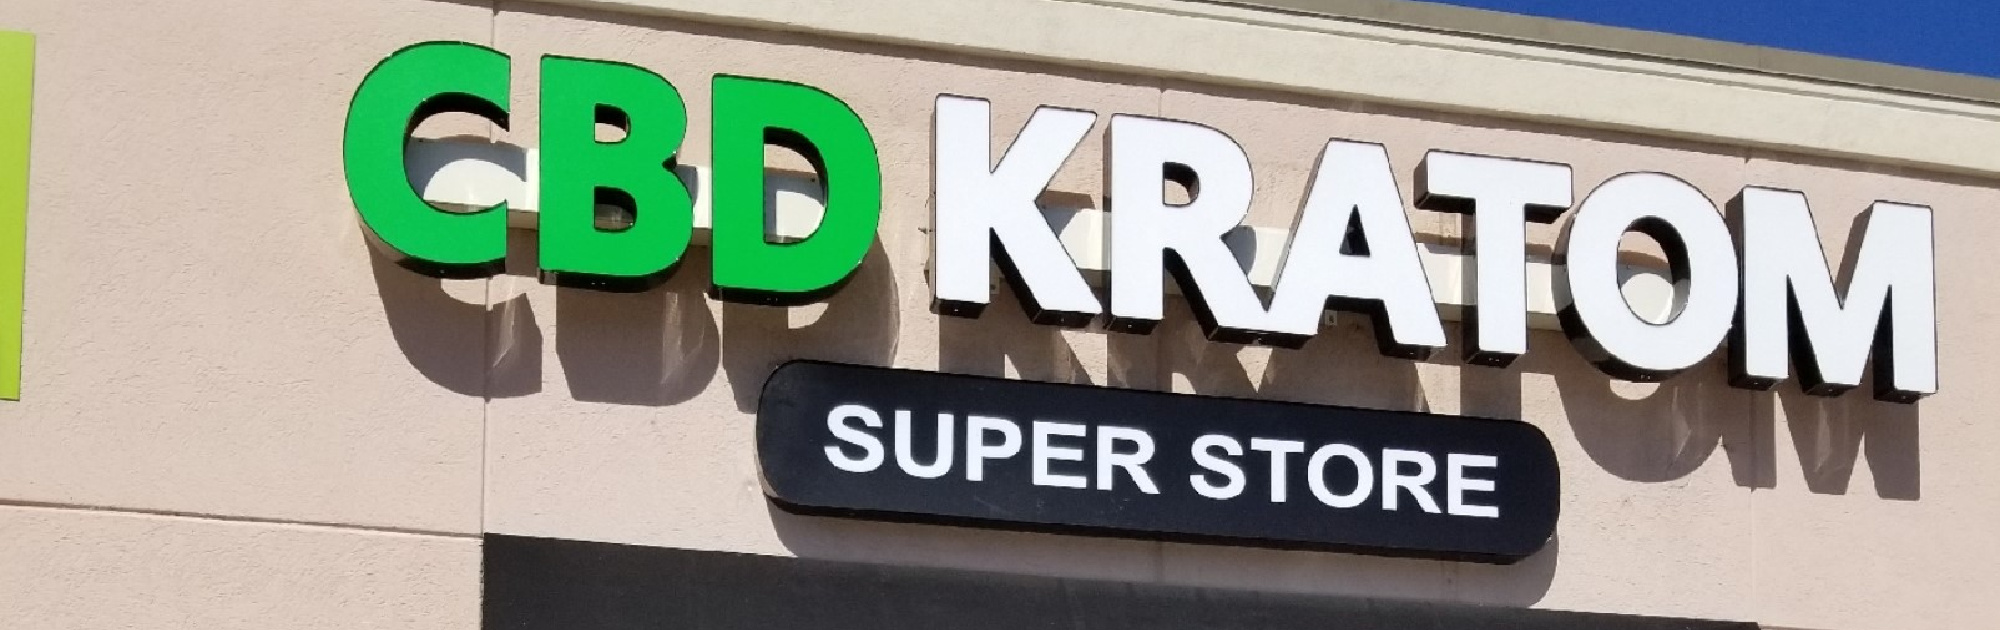 image of vape cbd kratom super store in springfield mo